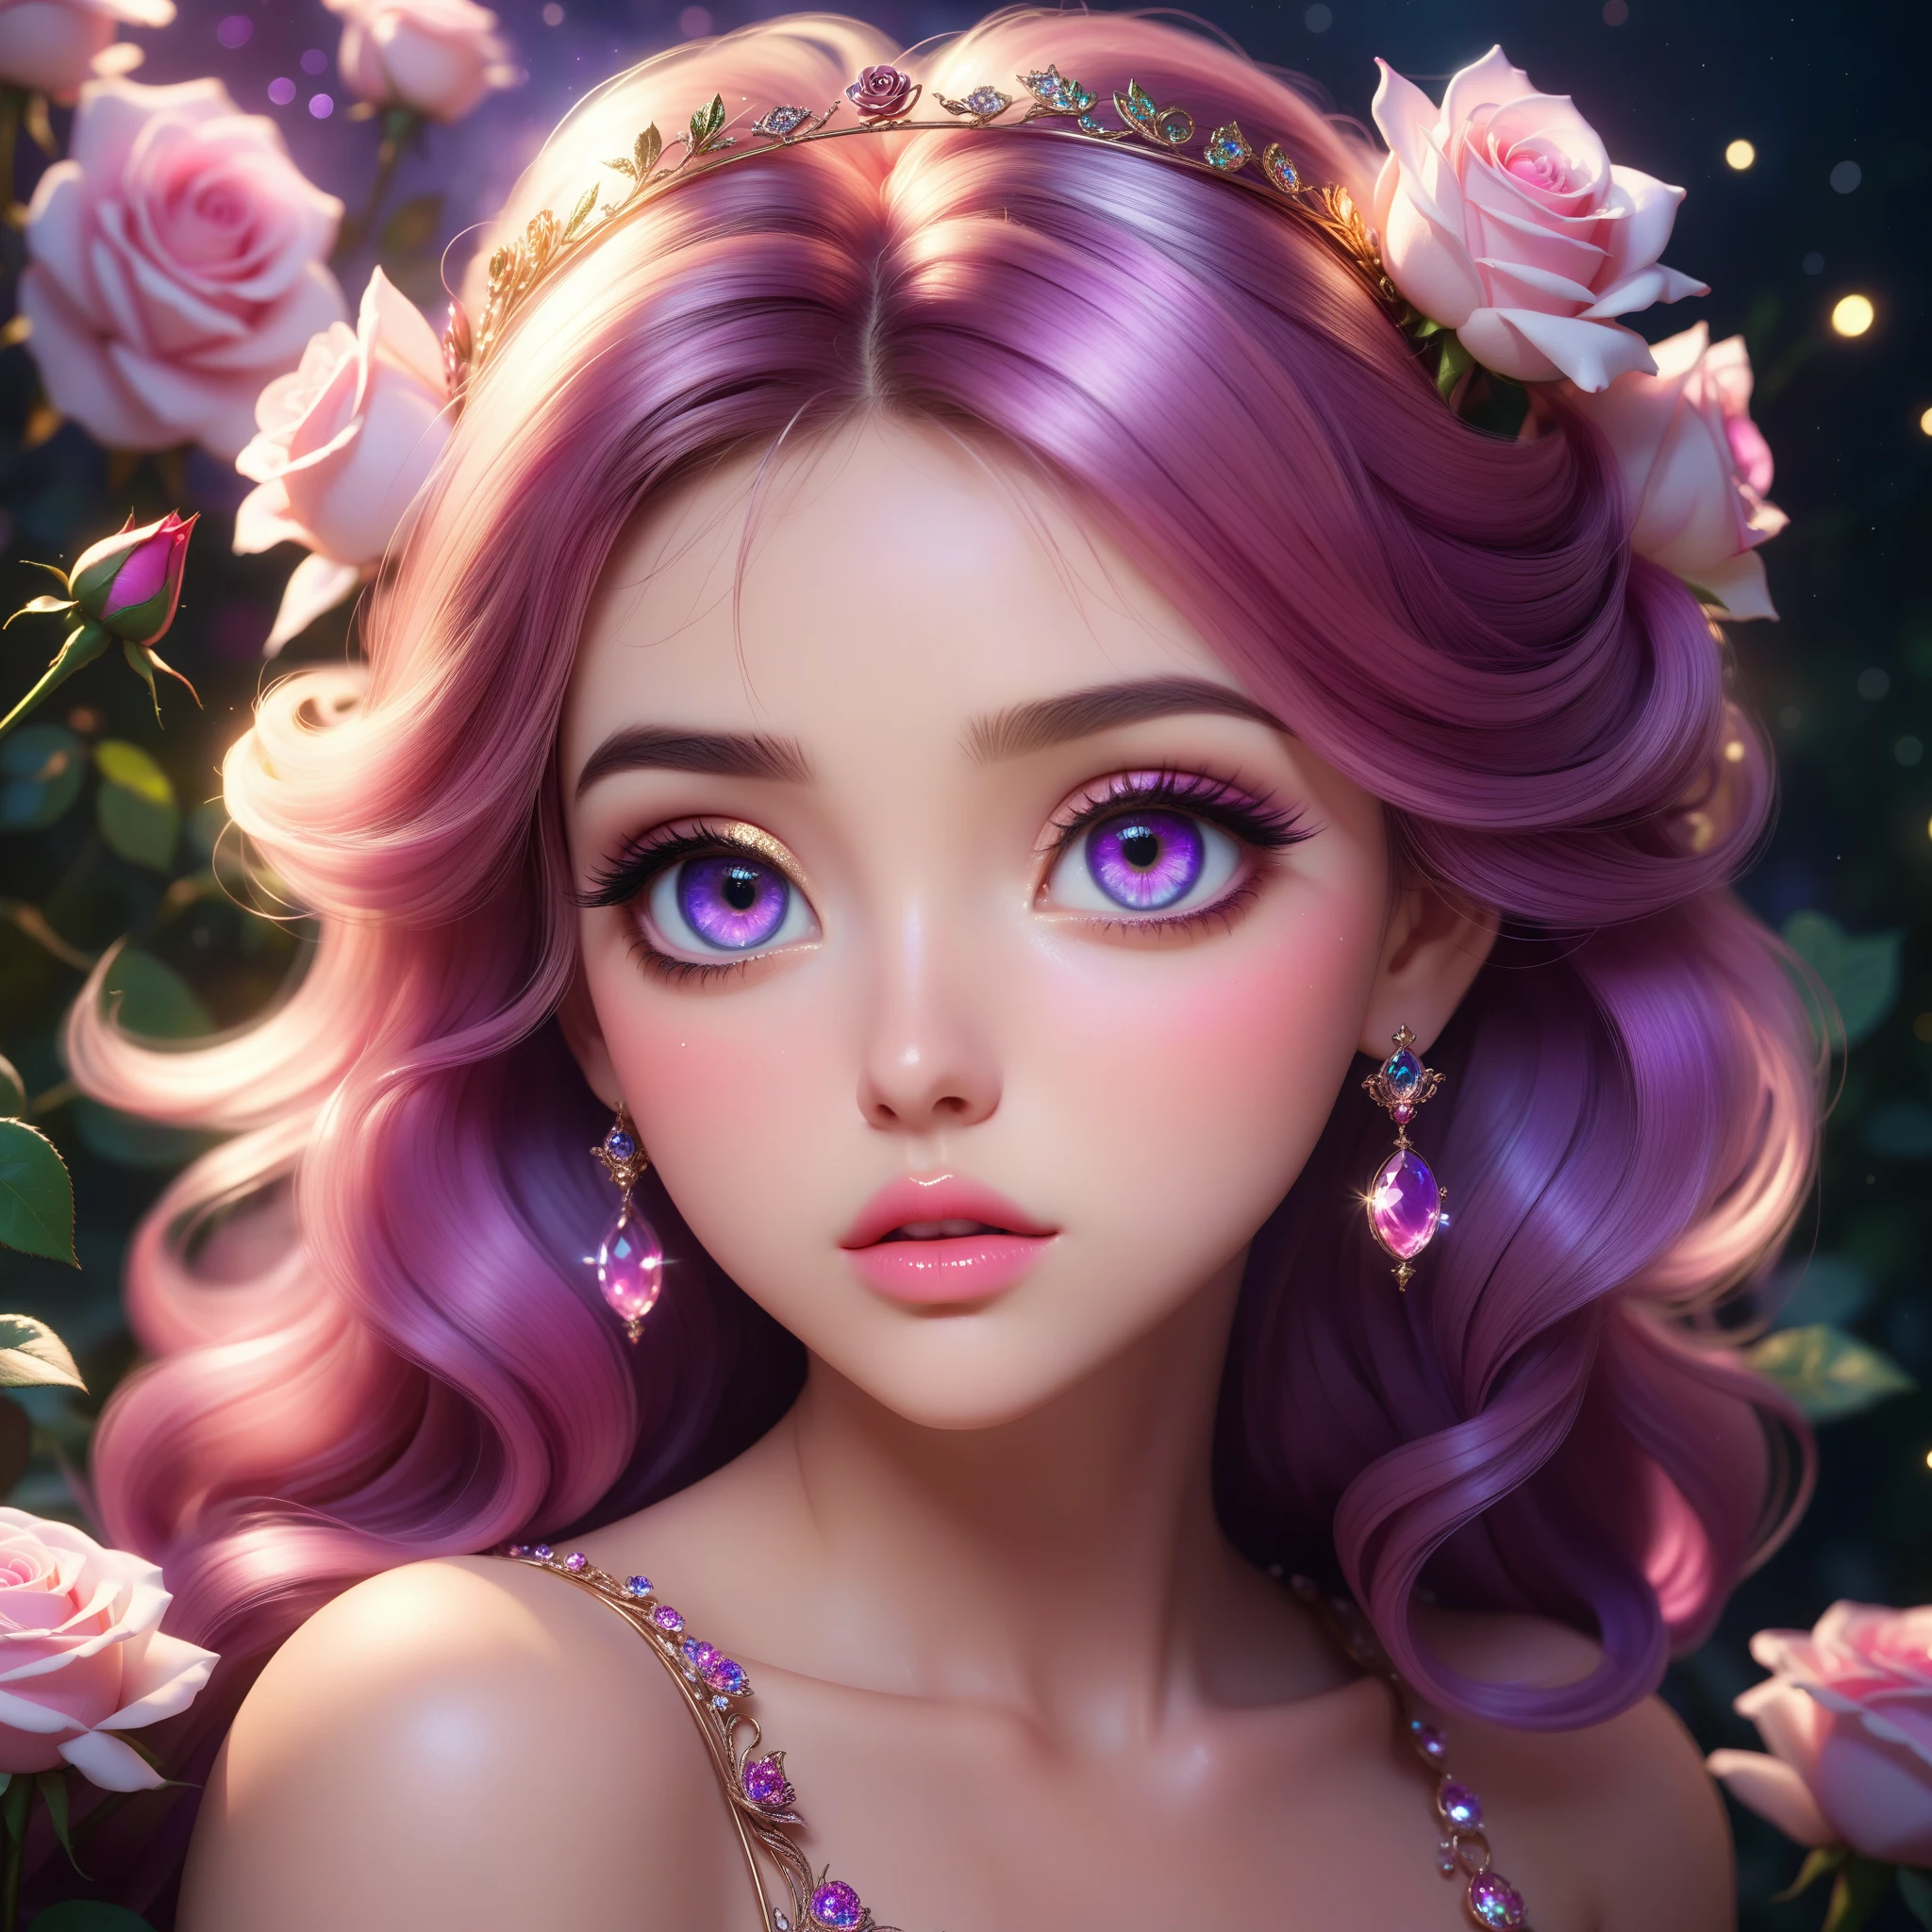 (这是一个美丽的, 柔软的, 缥缈, 和 (浪漫的) 带有持久粉红色光环的幻想图像, 童话奇幻元素, 和 a 迷人的 color palette.) Generate a beautiful  fairy woman with beautiful puffy lips 和 beautiful detailed eyes. Her glossy curled 头发 is realistically detailed 和 her (眼睛有黑眼圈) are interesting 和 colorful. Surround her with eternal roses in 闪光 shades of pink 和 purple. 确保她的脸部完美, 头发, 和 eyes. Include luminous flowers 和 detailed roses. Utilize dynamic composition 和 dramatic lighting 和 cinematic lighting to create an interesting fantasy image. The background of the image is interesting 和 ultra-detailed, with 柔软的 fantasy lighting 和 gradients. 英国玫瑰, 公主, 甜的, 迷人的, 闪光, 微光, 闪闪发光, 占星幻想, (((杰作))), (最好的质量), 漂亮的眼睛, 完美丰唇, 宝石色调, 亮度.  8千, 虚幻引擎 5, 辛烷值渲染, pixiv 上的热门, 风扇盒, 斯克布, 杰作, 细致的脸部, smooth 柔软的 skin, 大大的梦幻眼睛, beautiful intricate colored 头发, 动漫睁大眼睛, 柔软的 lighting, 概念艺术, 数字绘画,